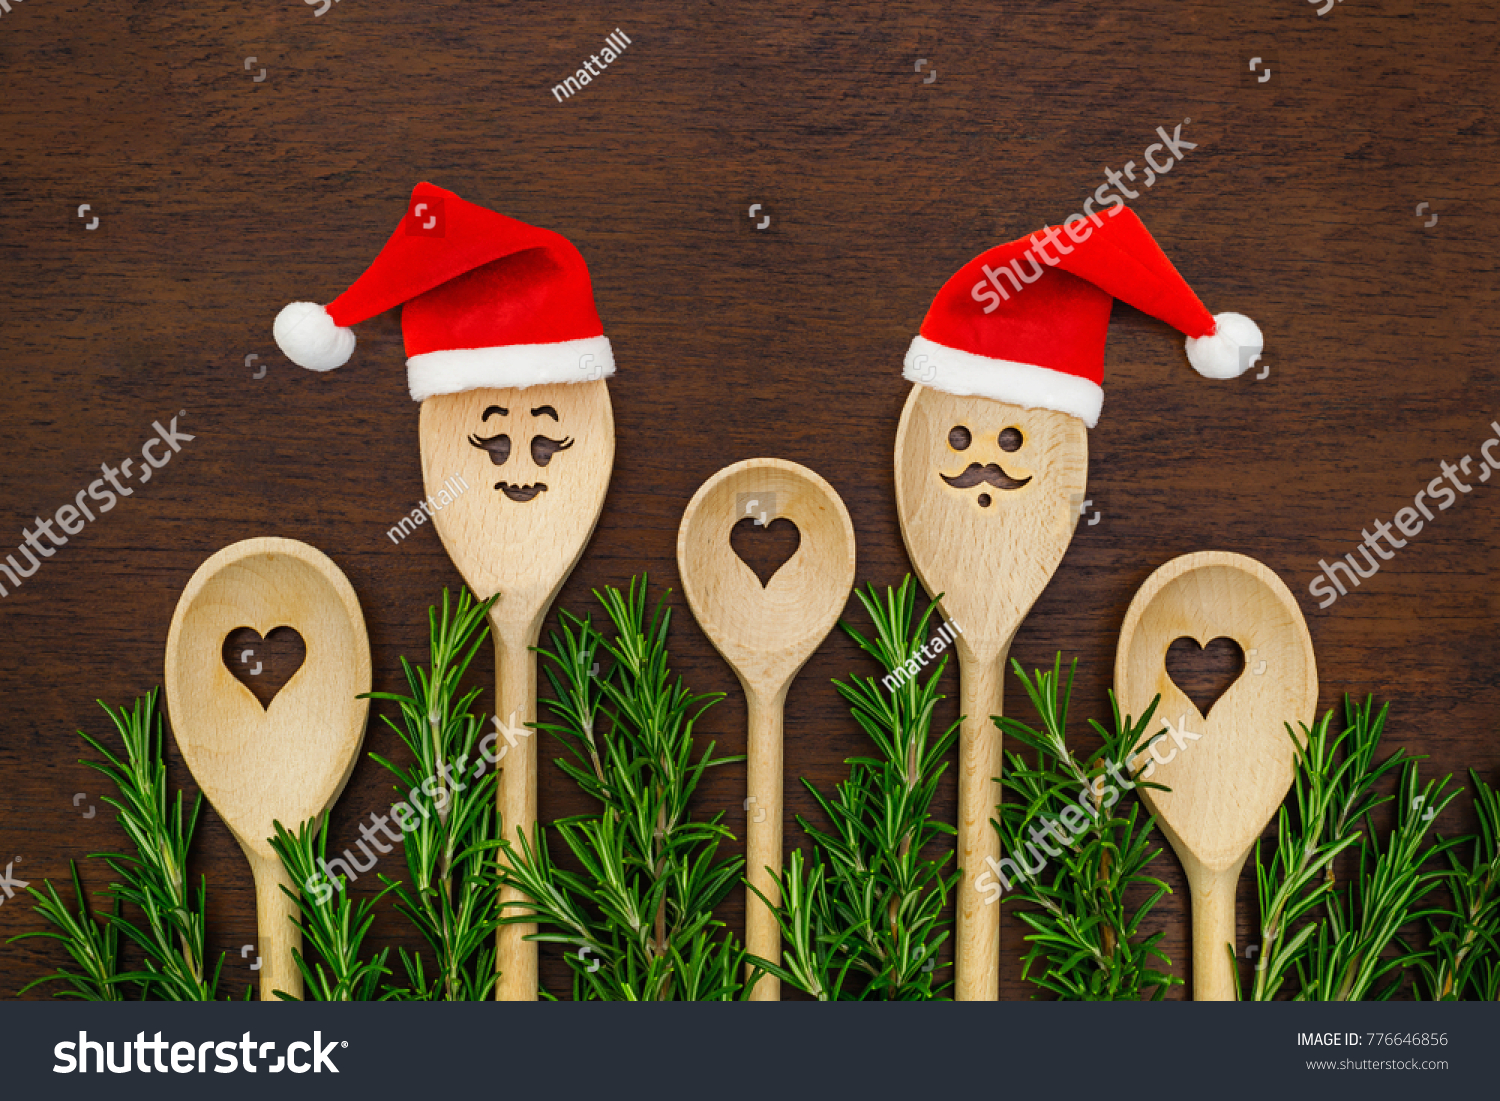 Christmas wooden Spoon Santa Wooden spoon Holiday Wooden Spoon Holiday Kitchen Spoon